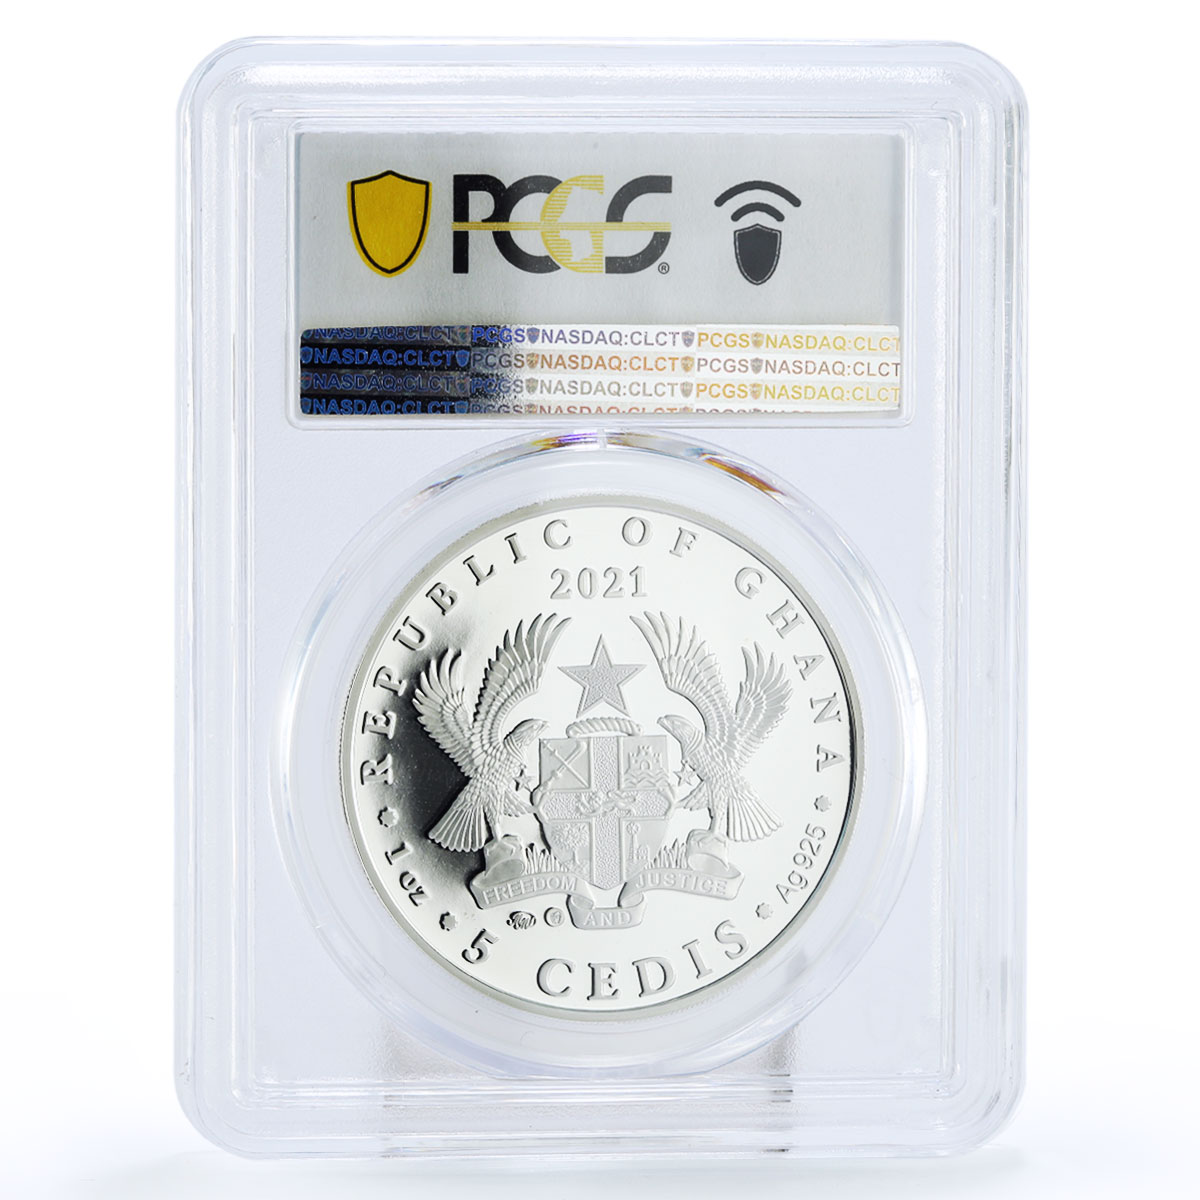 Ghana 5 cedis Vladimir Vysotsky Hamlet PR69 PCGS silver coin 2021